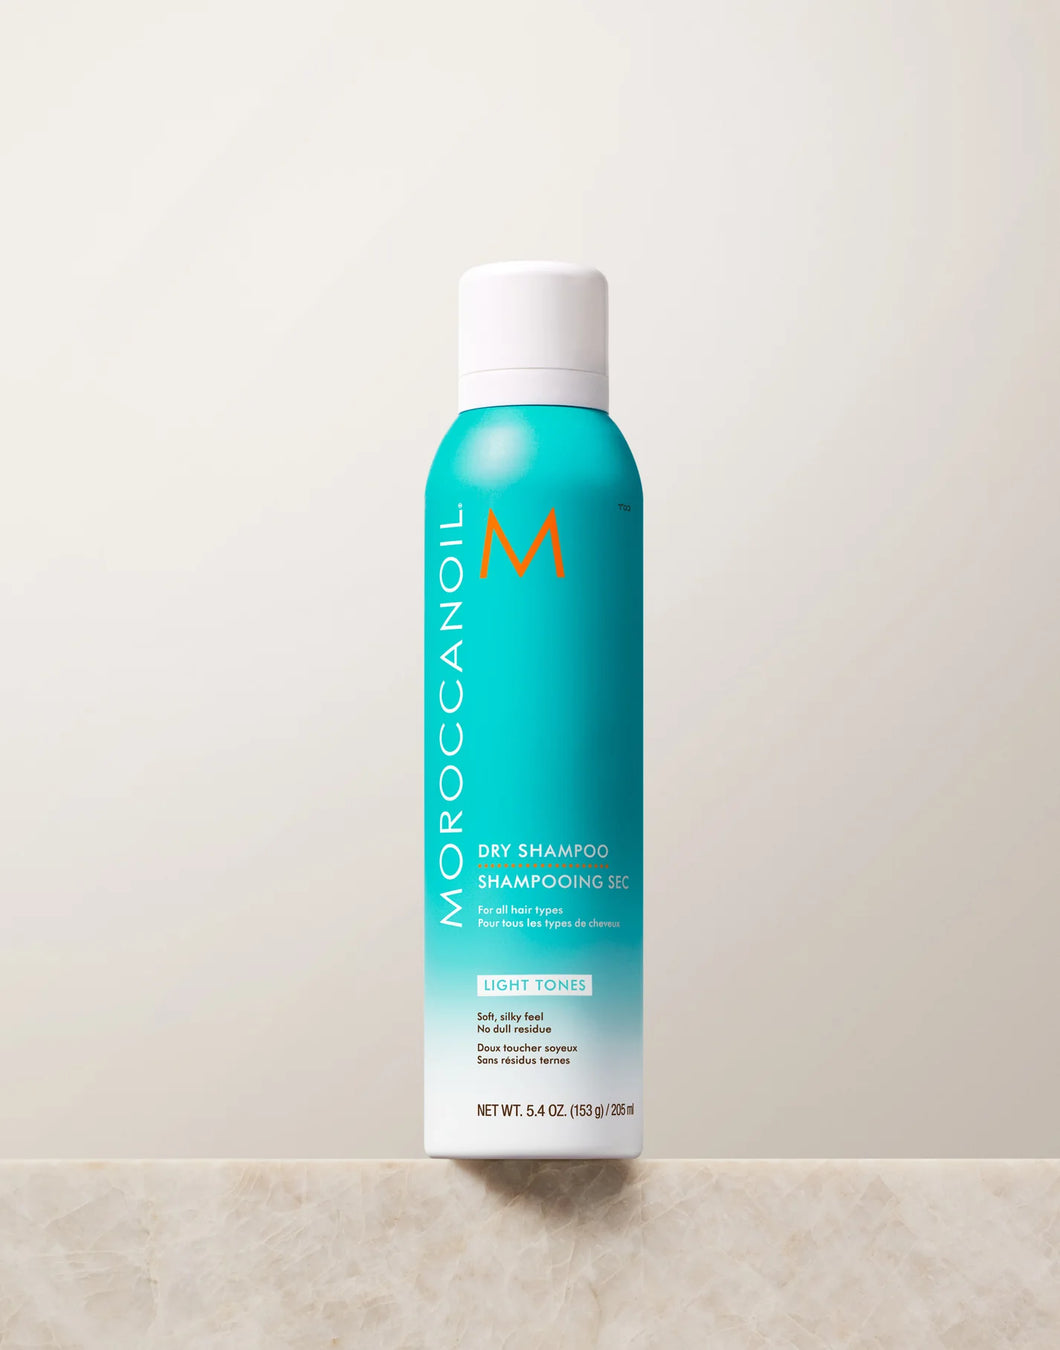 Dry Shampoo Light Tones - For all hair types - Full Size